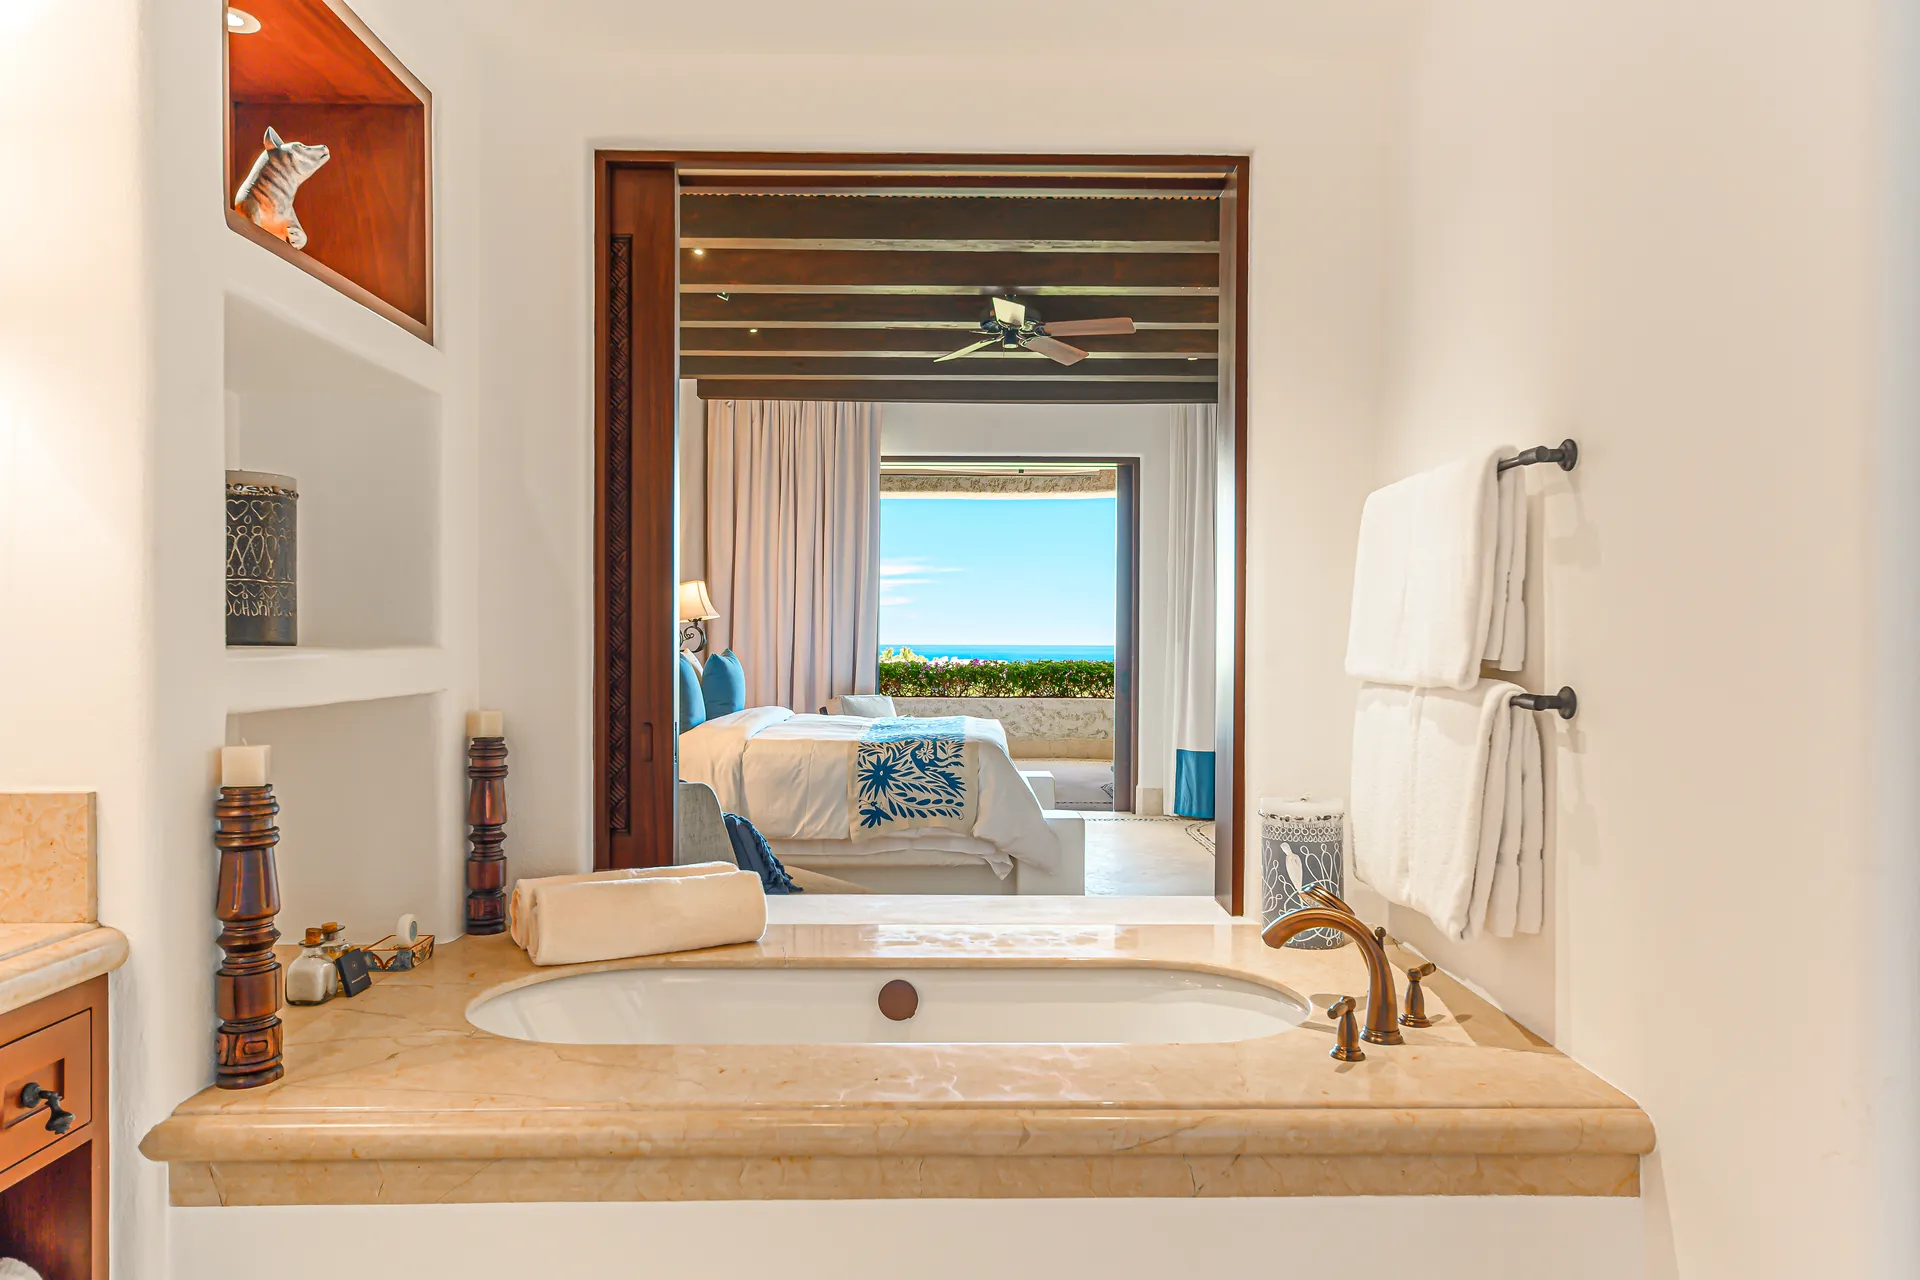 Las Ventanas 7201 is a luxury three-bedroom Rosewood branded residence in Los Cabos, Mexico.